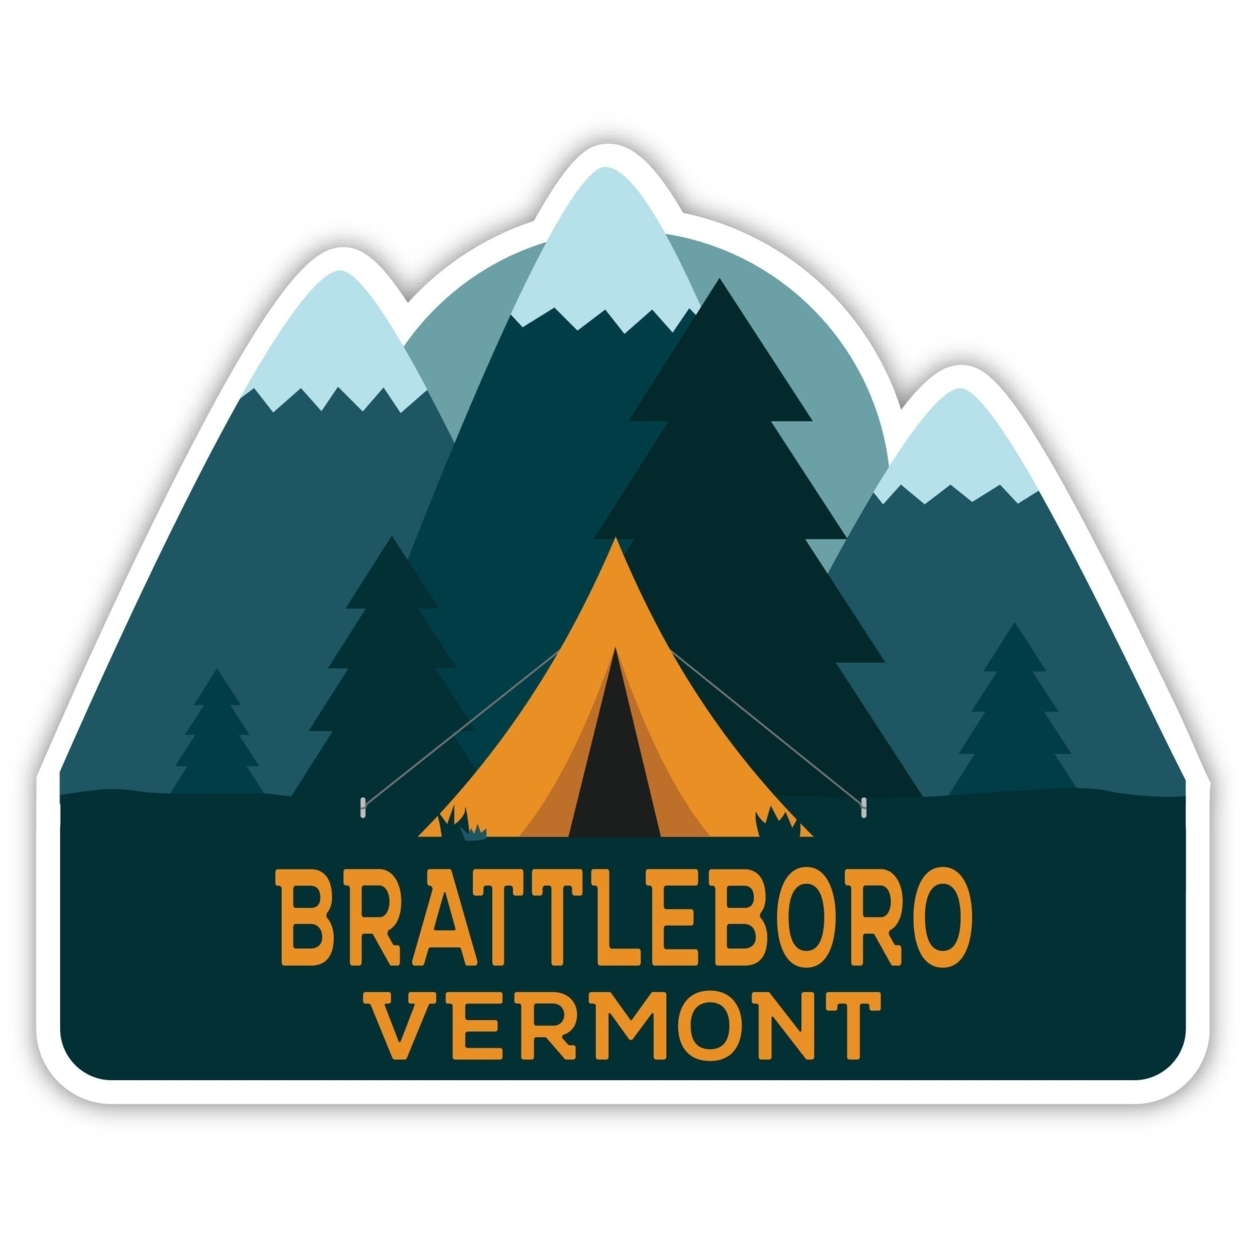 Brattleboro Vermont Souvenir Decorative Stickers (Choose Theme And Size) - 4-Pack, 2-Inch, Tent